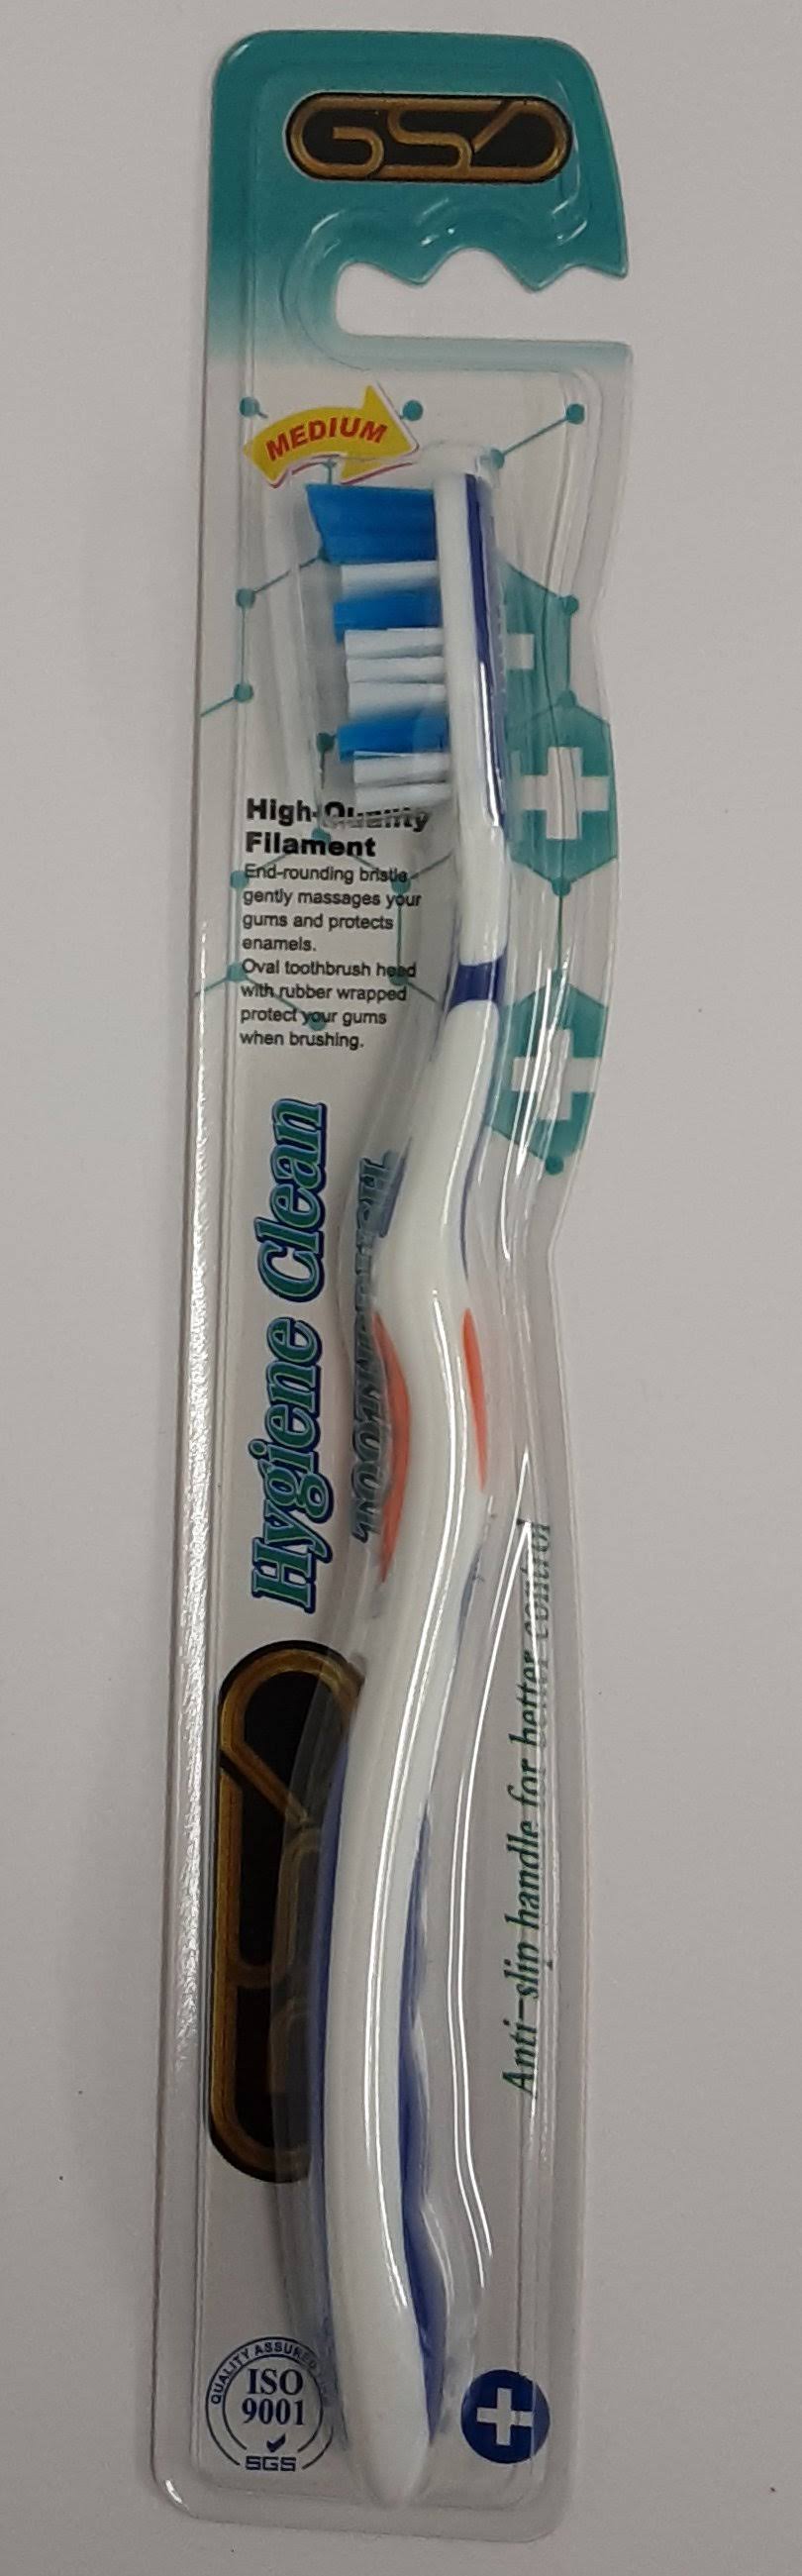 GSD Toothbrush Medium